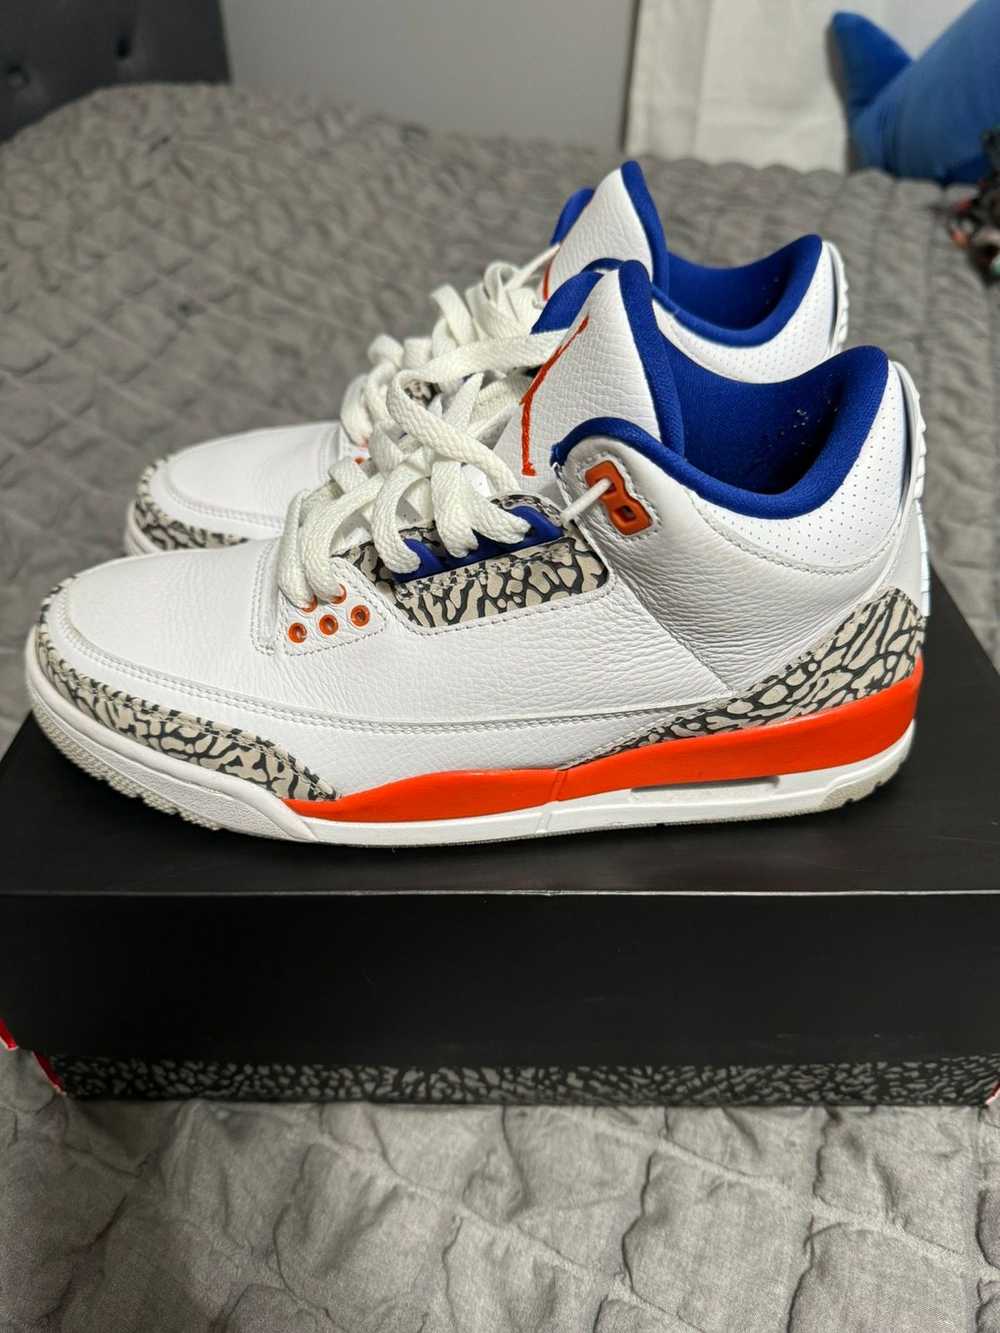 Jordan Brand Jordan 3 Retro Knicks - image 4